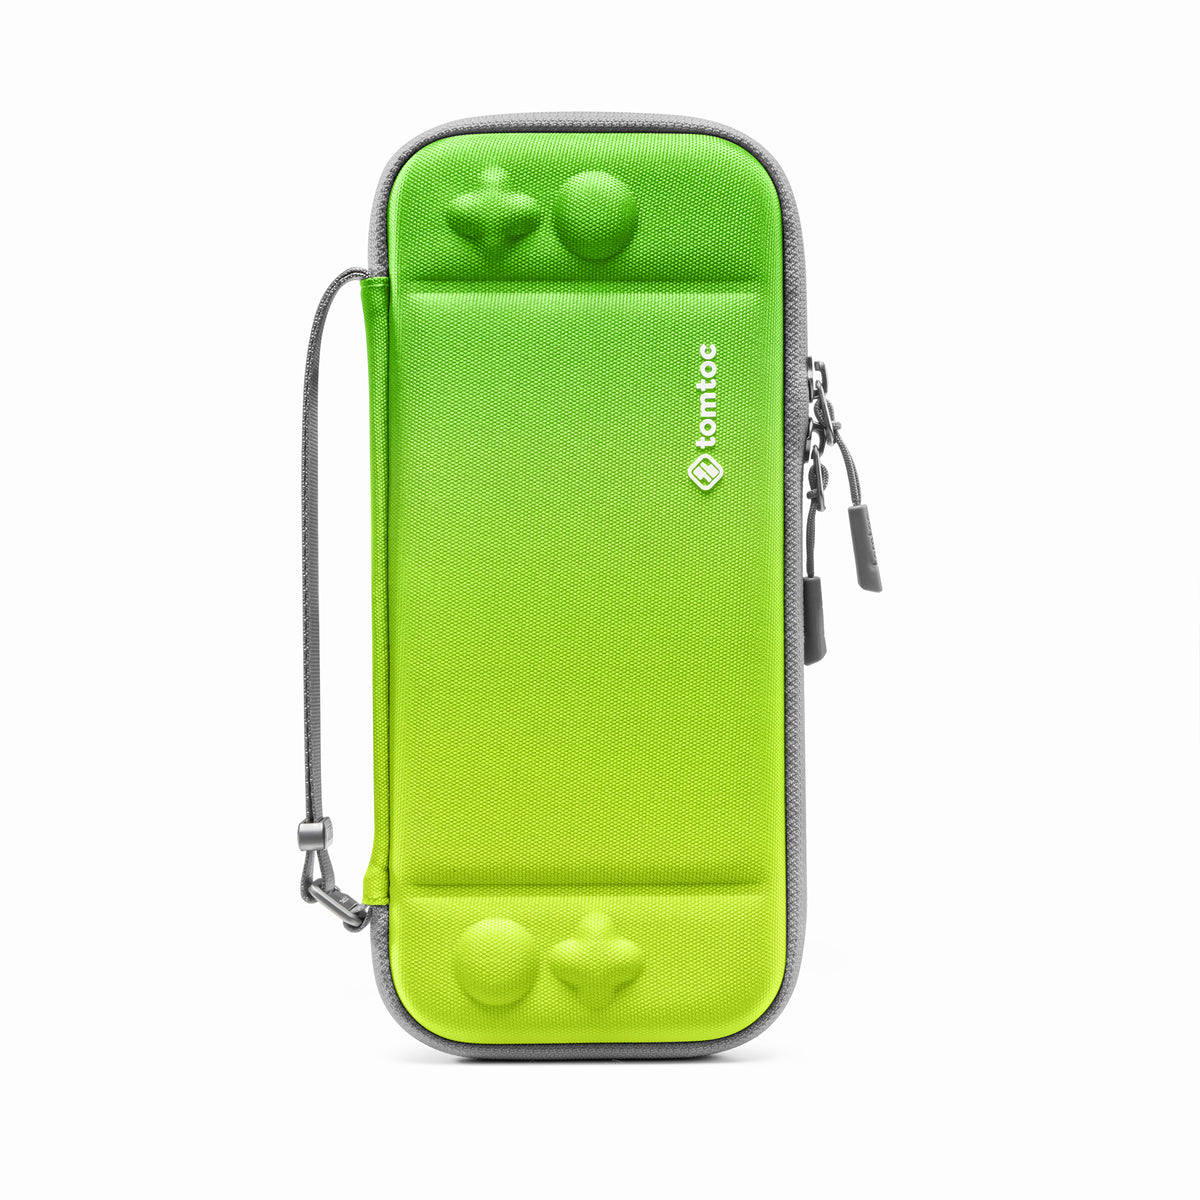 Fr-tec Nintendo Switch Lite Glow In The Dark Silicone Case Green